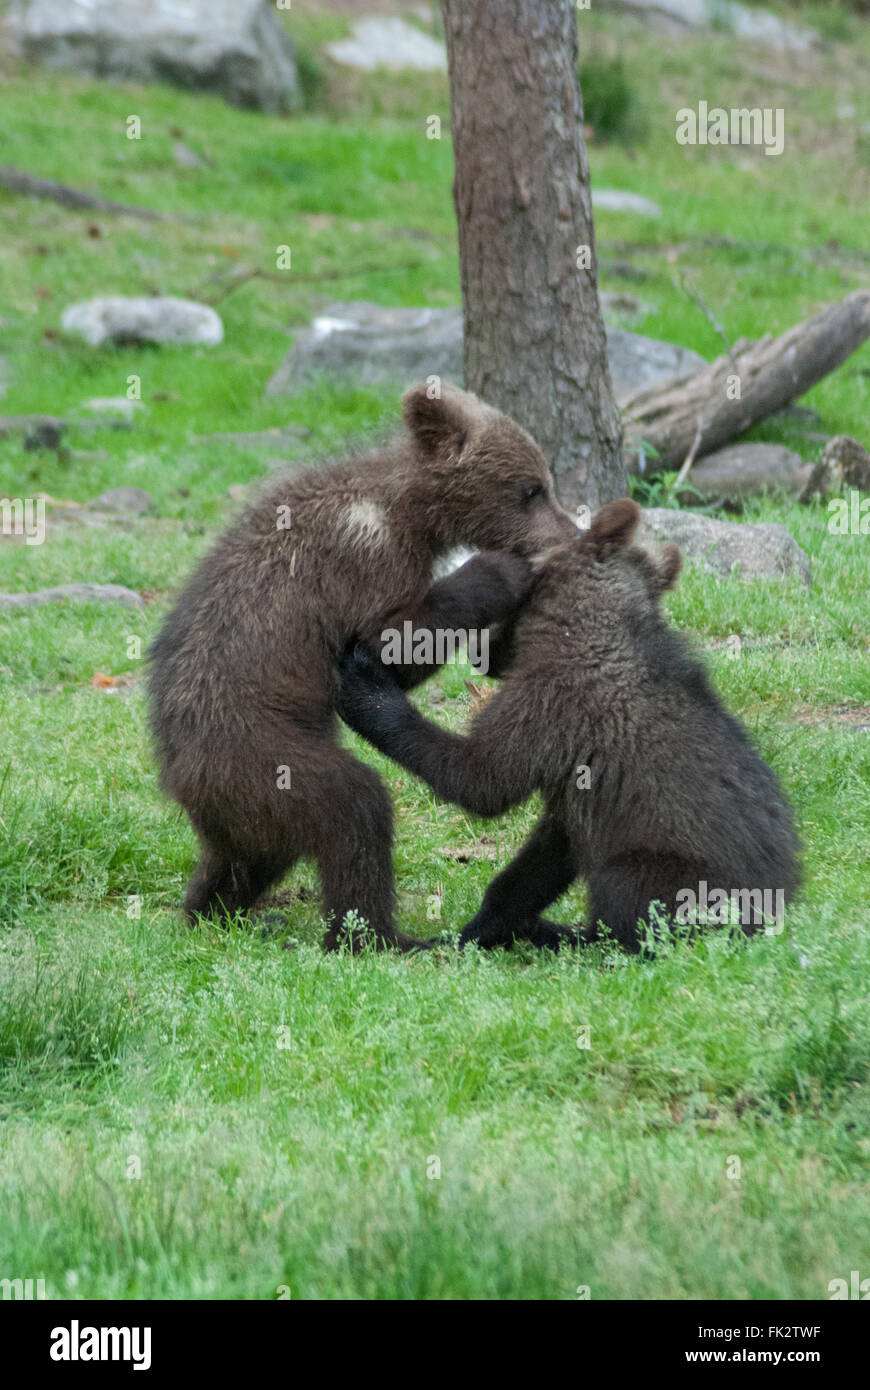 Unione di orso bruno eurasiatico o orso bruno ( Ursus arctos arctos) cubs giocando nella Taiga foresta in Finlandia orientale Foto Stock